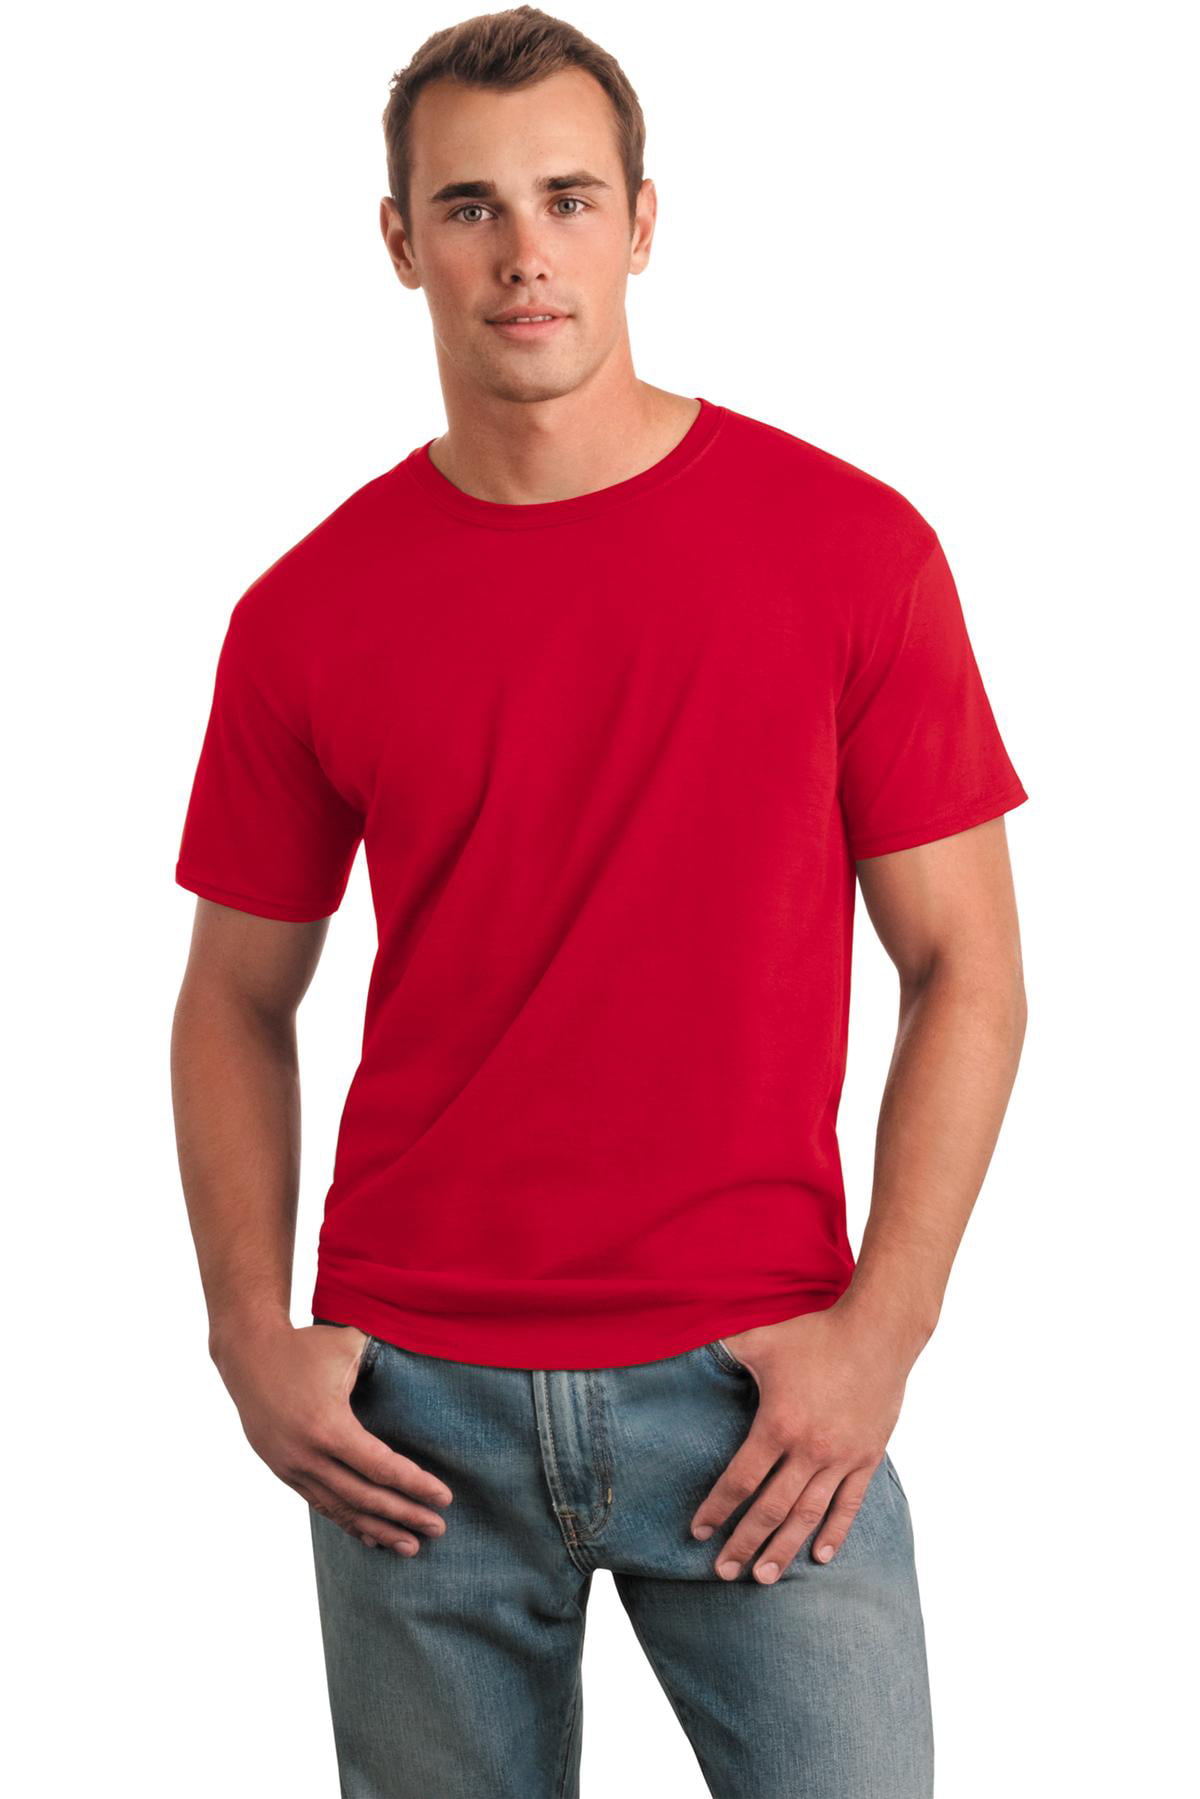 gildan cherry red t shirt